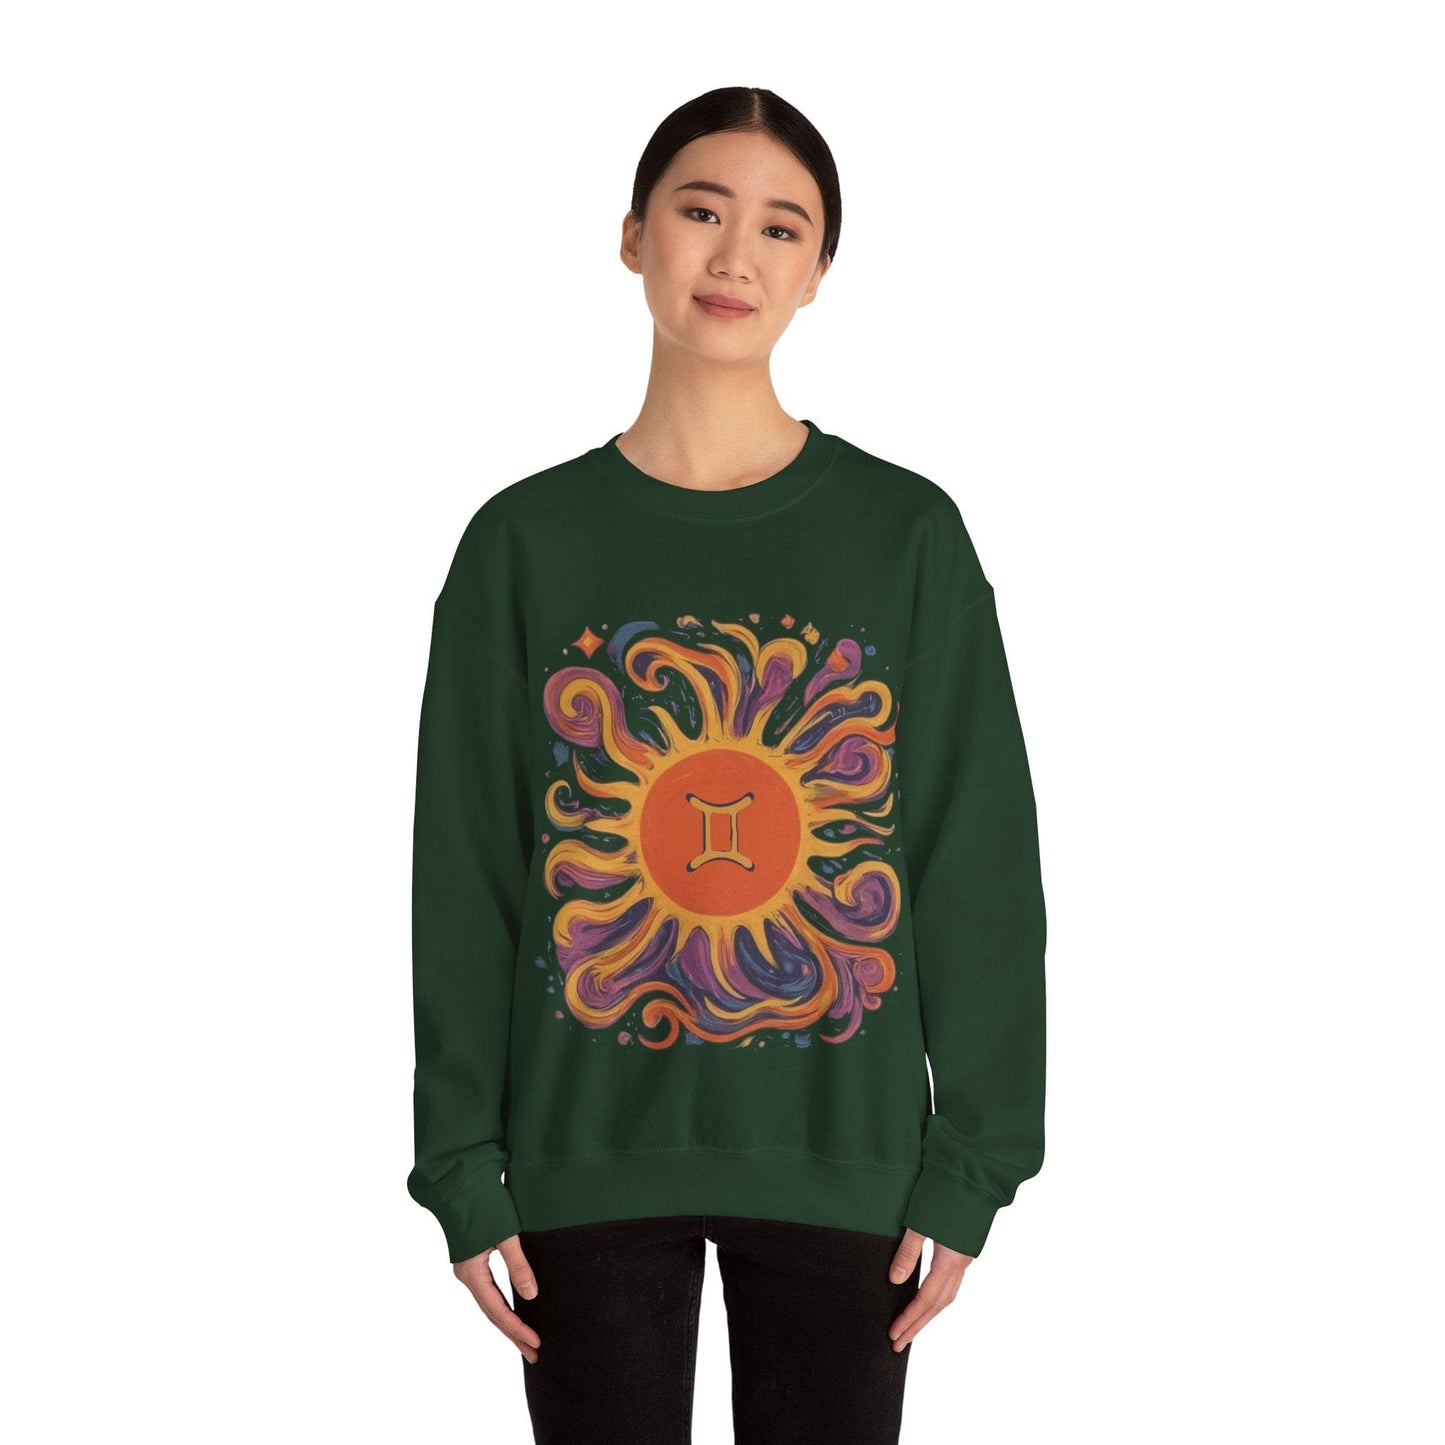 Sweatshirt Gemini Radiant Sun Soft Sweater: Dual Shine for the Twin Sign